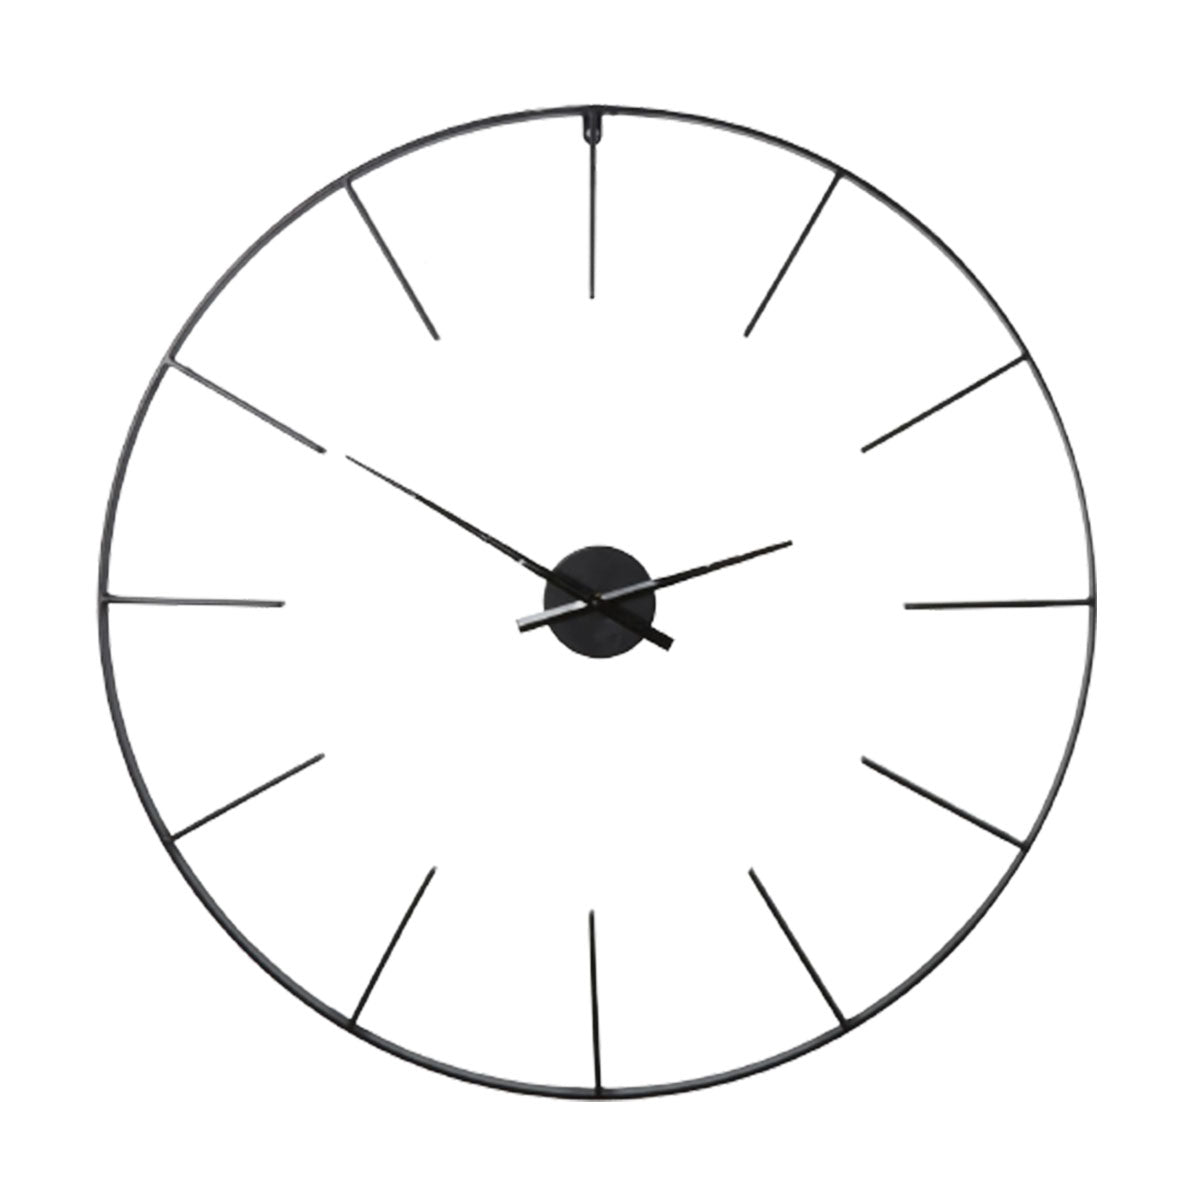 Tiverton Black Skeleton Wall Clock 80cm diameter